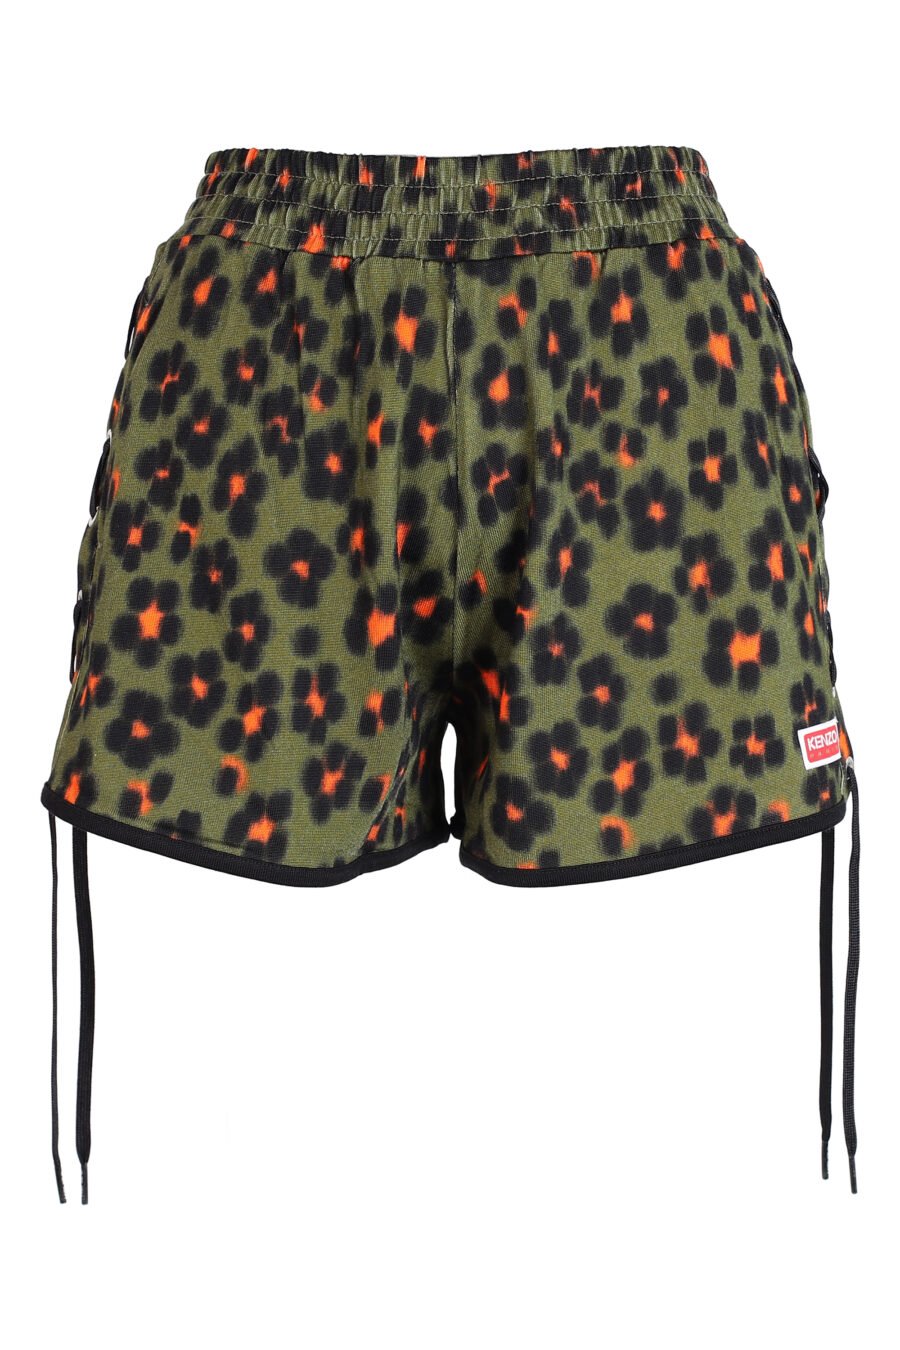 Grüne Shorts mit orangefarbenem Leopardenmuster - IMG 3292